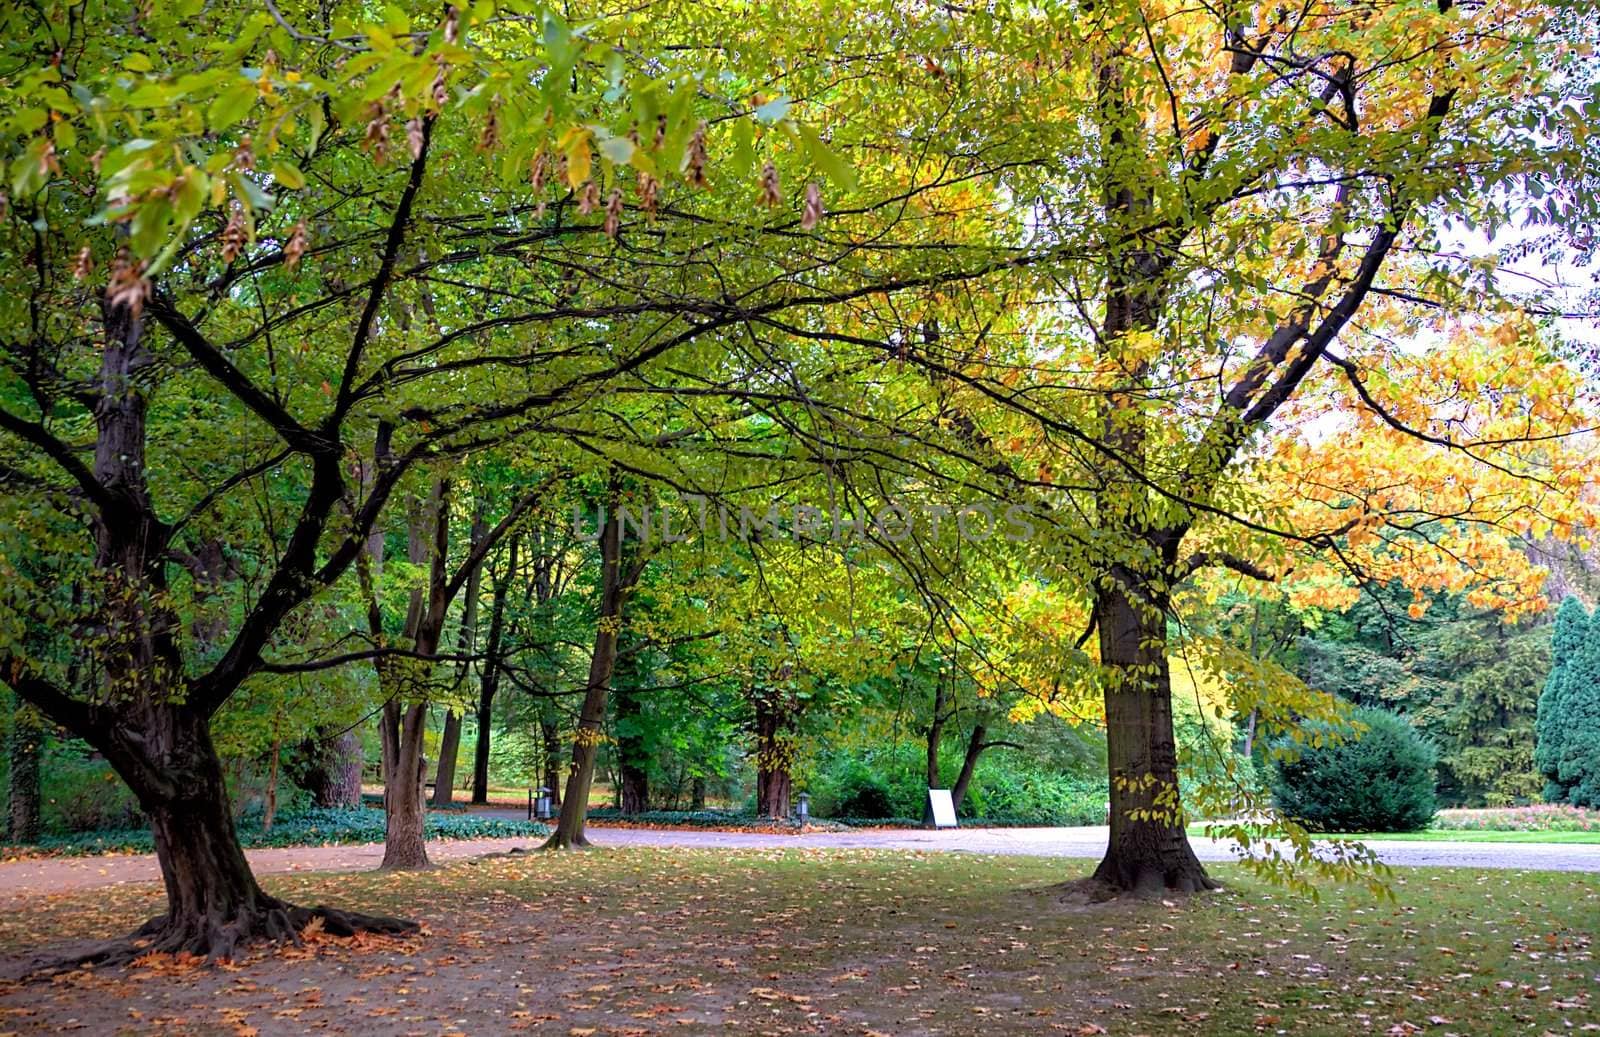 autumn trees in lazienki park, warsaw, poland by arnelsr